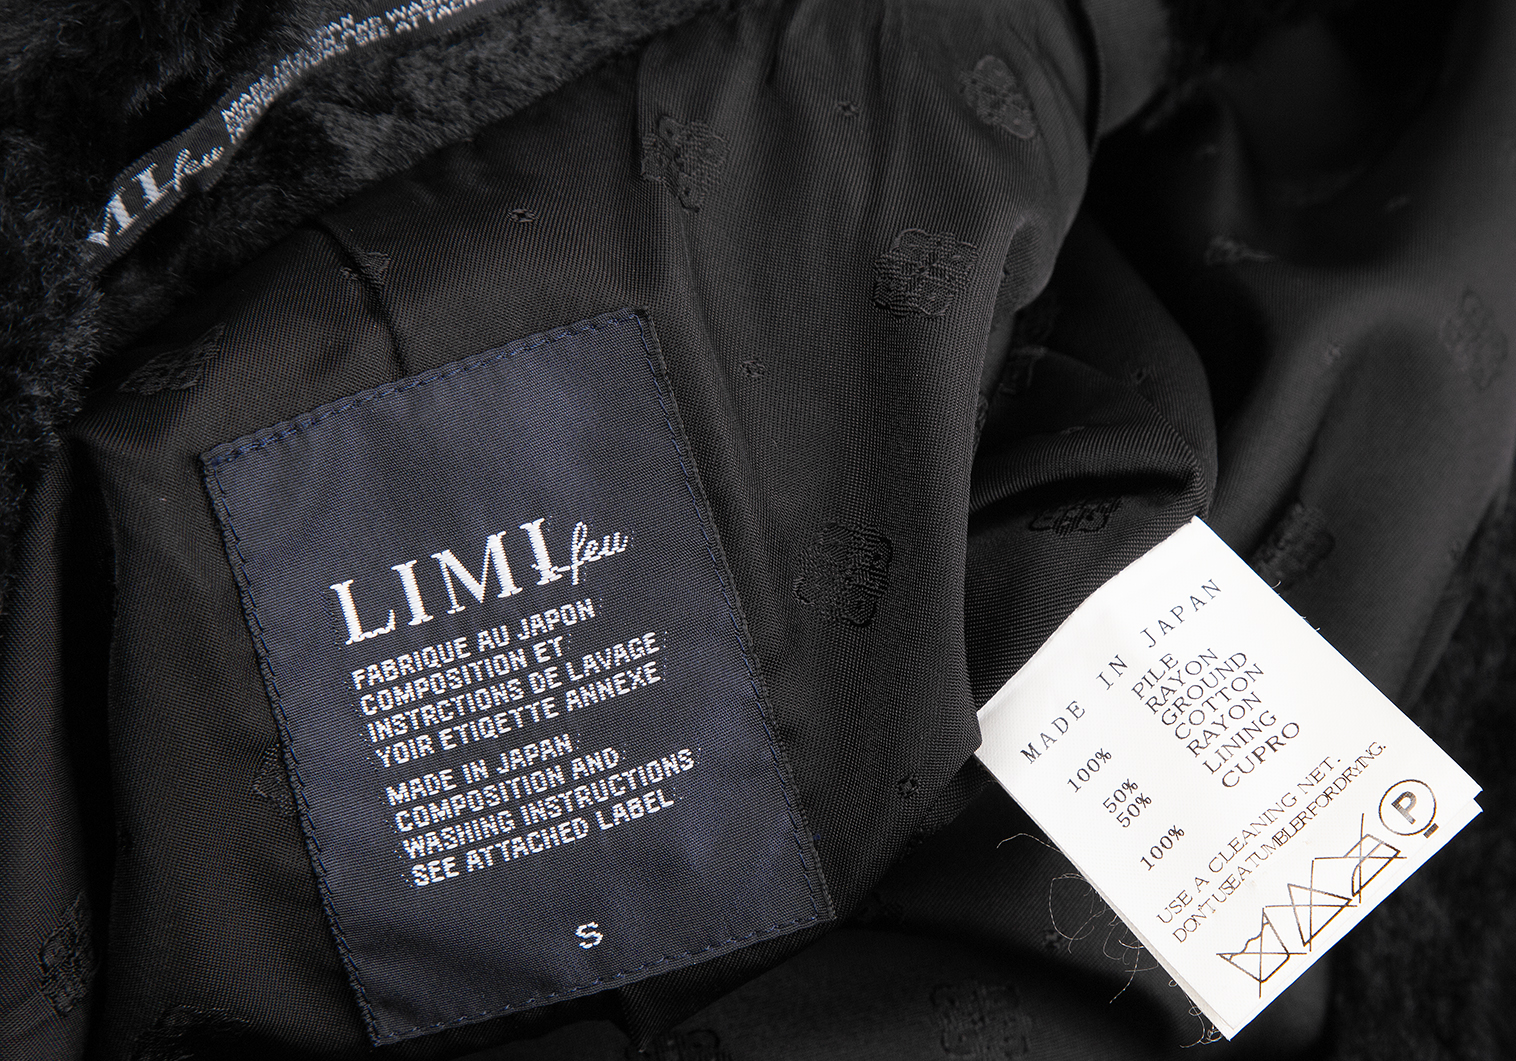 LIMI feu リミフゥ コート ウール 変形 ドレープ ブラック 黒 日本製-